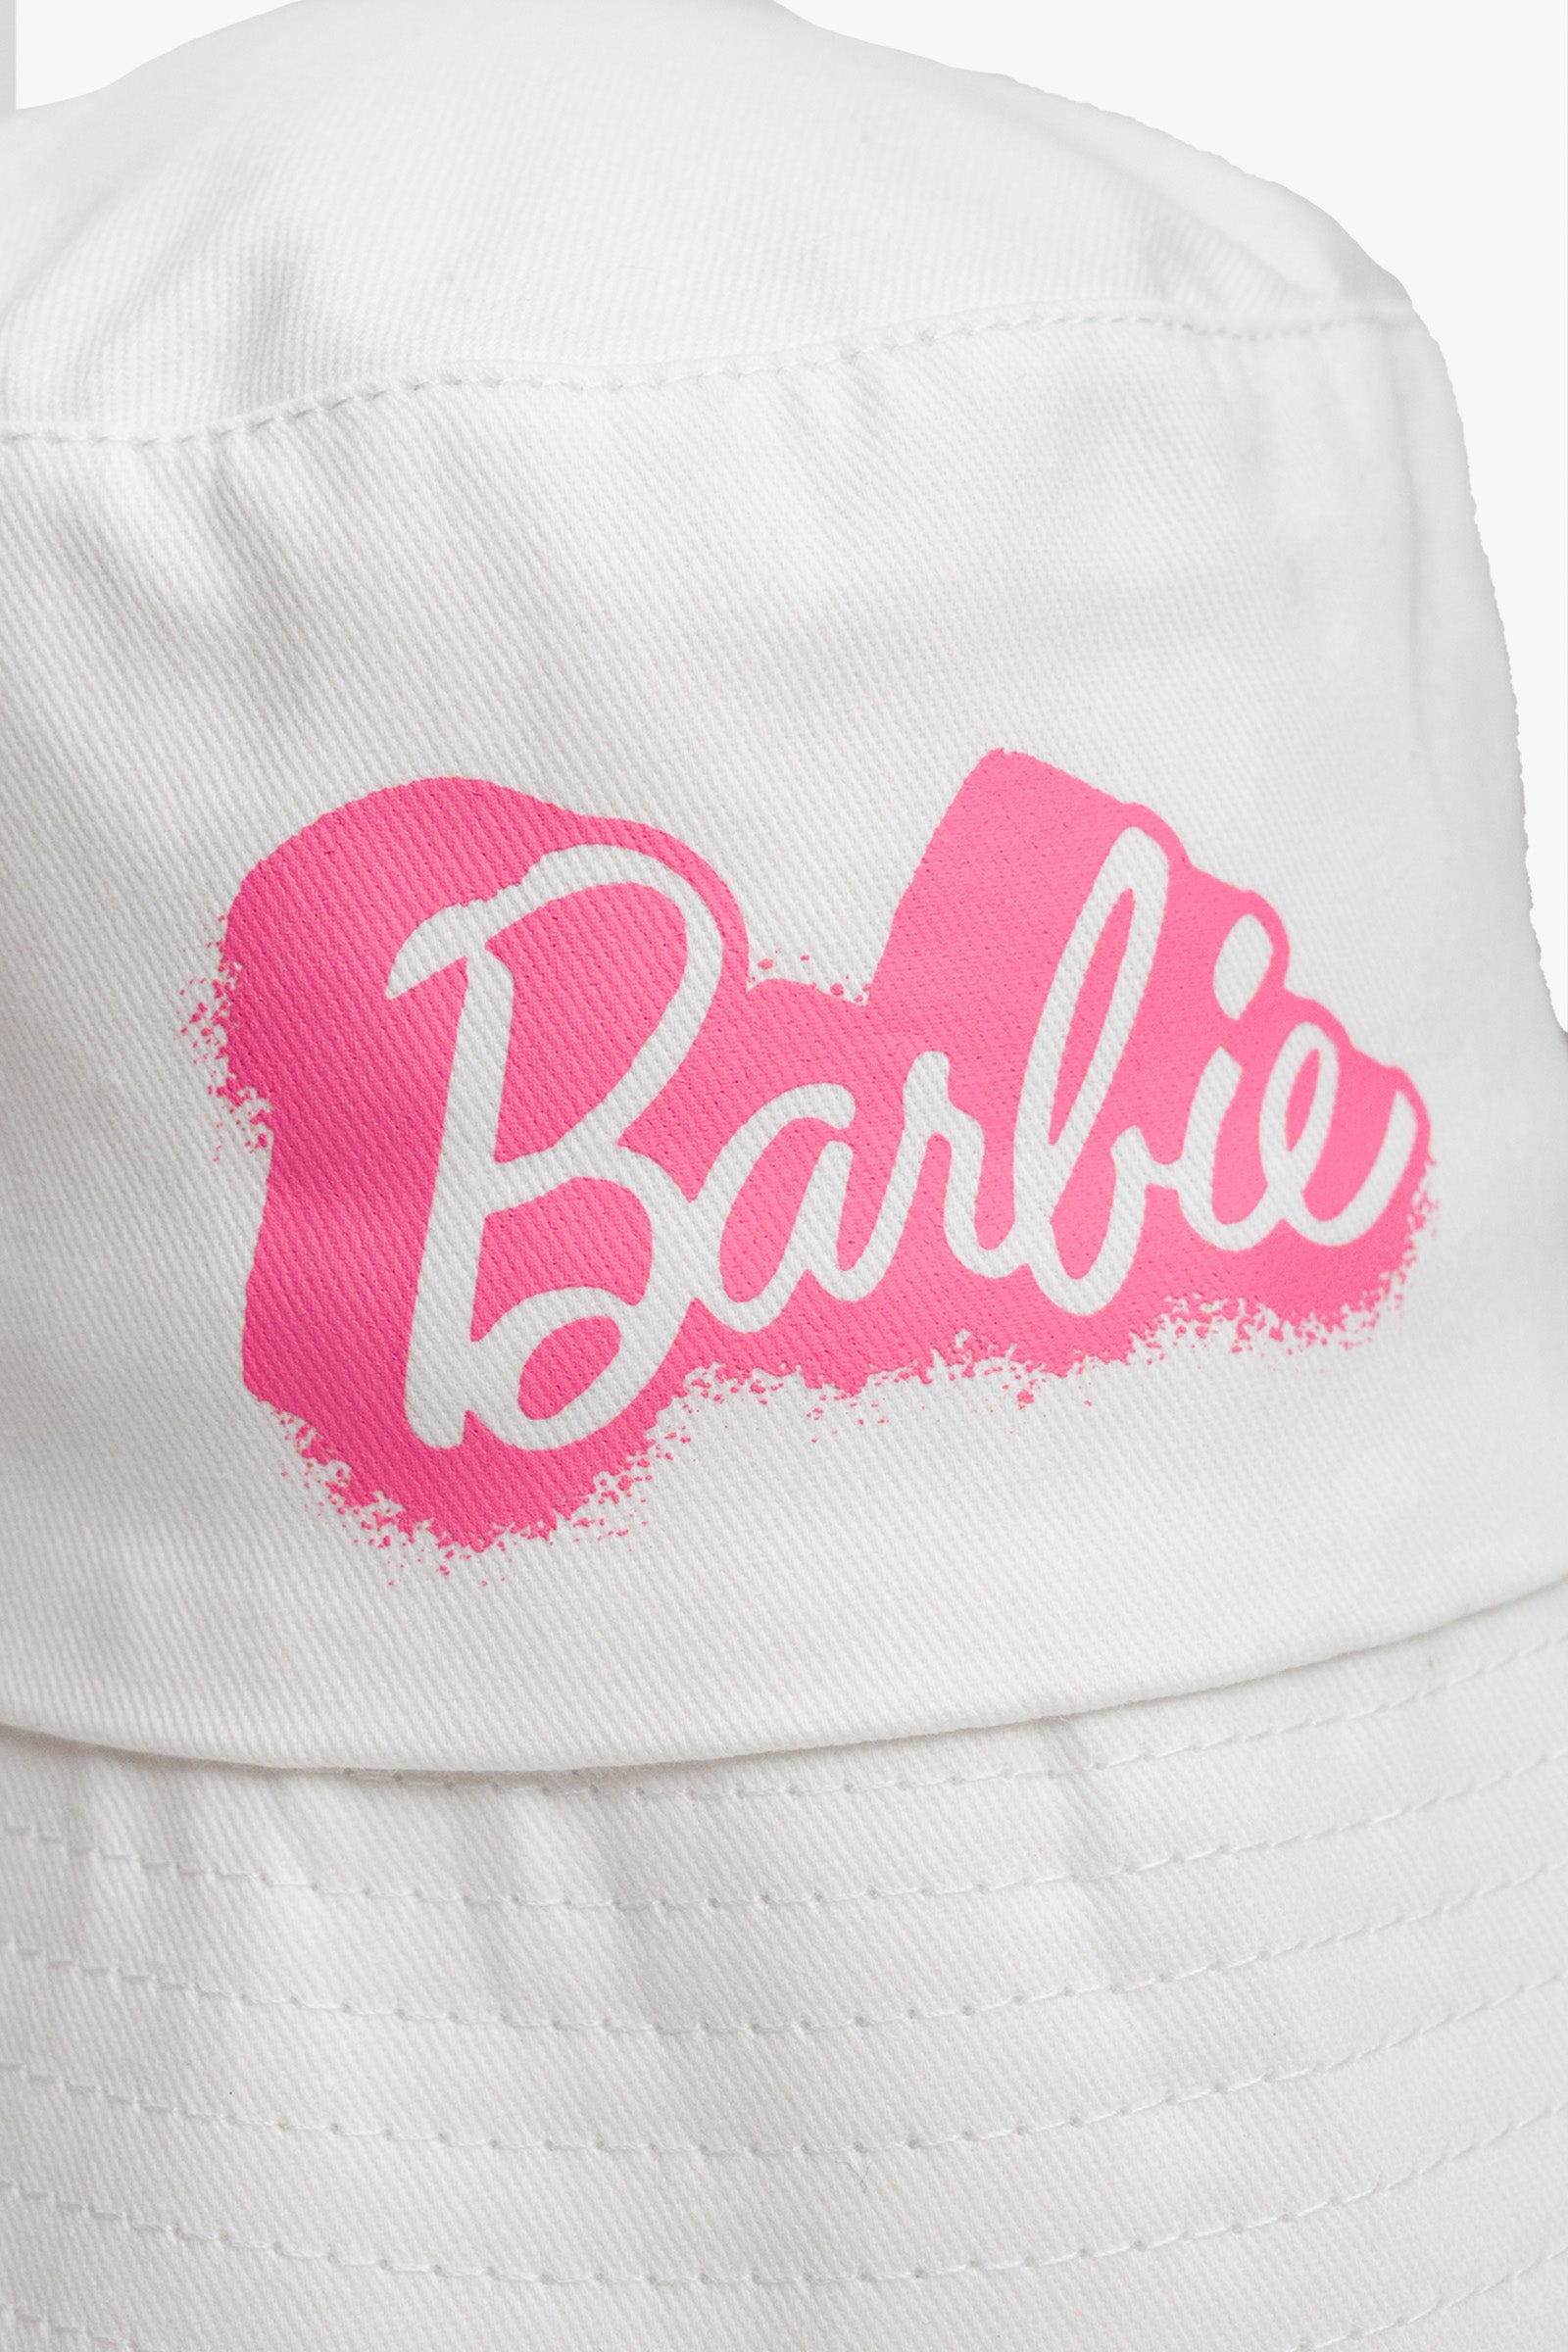 Gertex Barbie Youth Girls Limited Edition White Bucket Hat